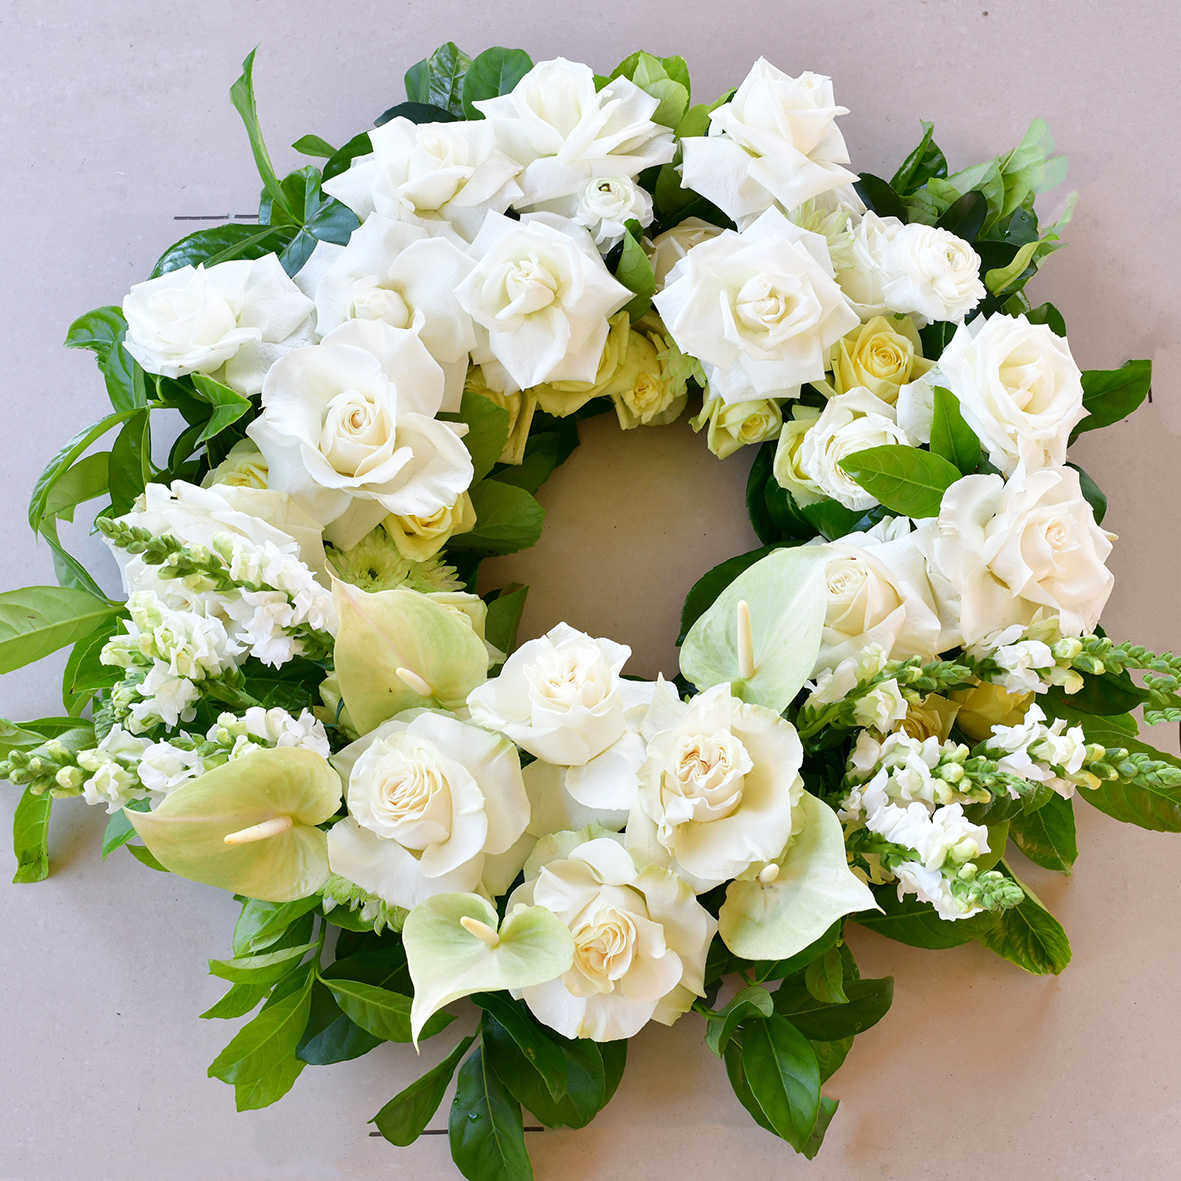 Funeral Wreath Classic White & Green